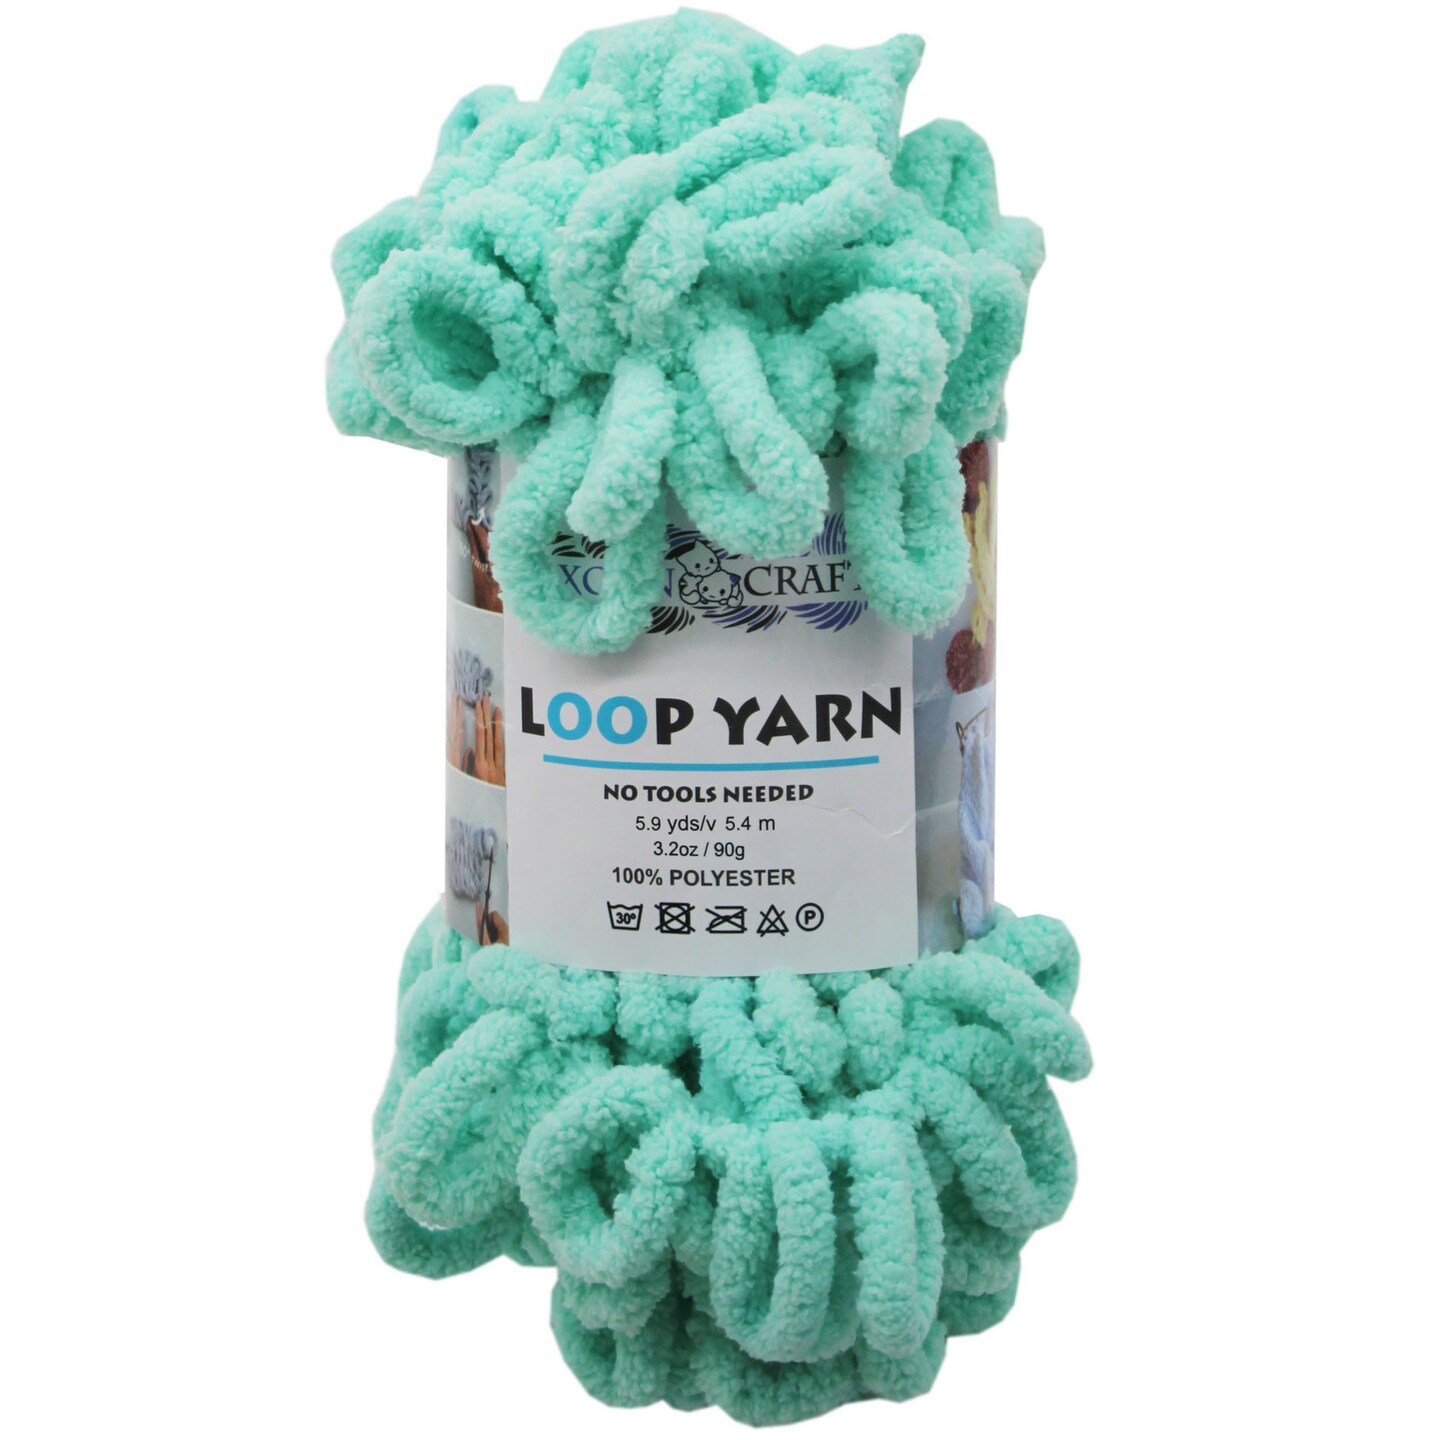 Buy loops yarn Online in KUWAIT at Low Prices at desertcart